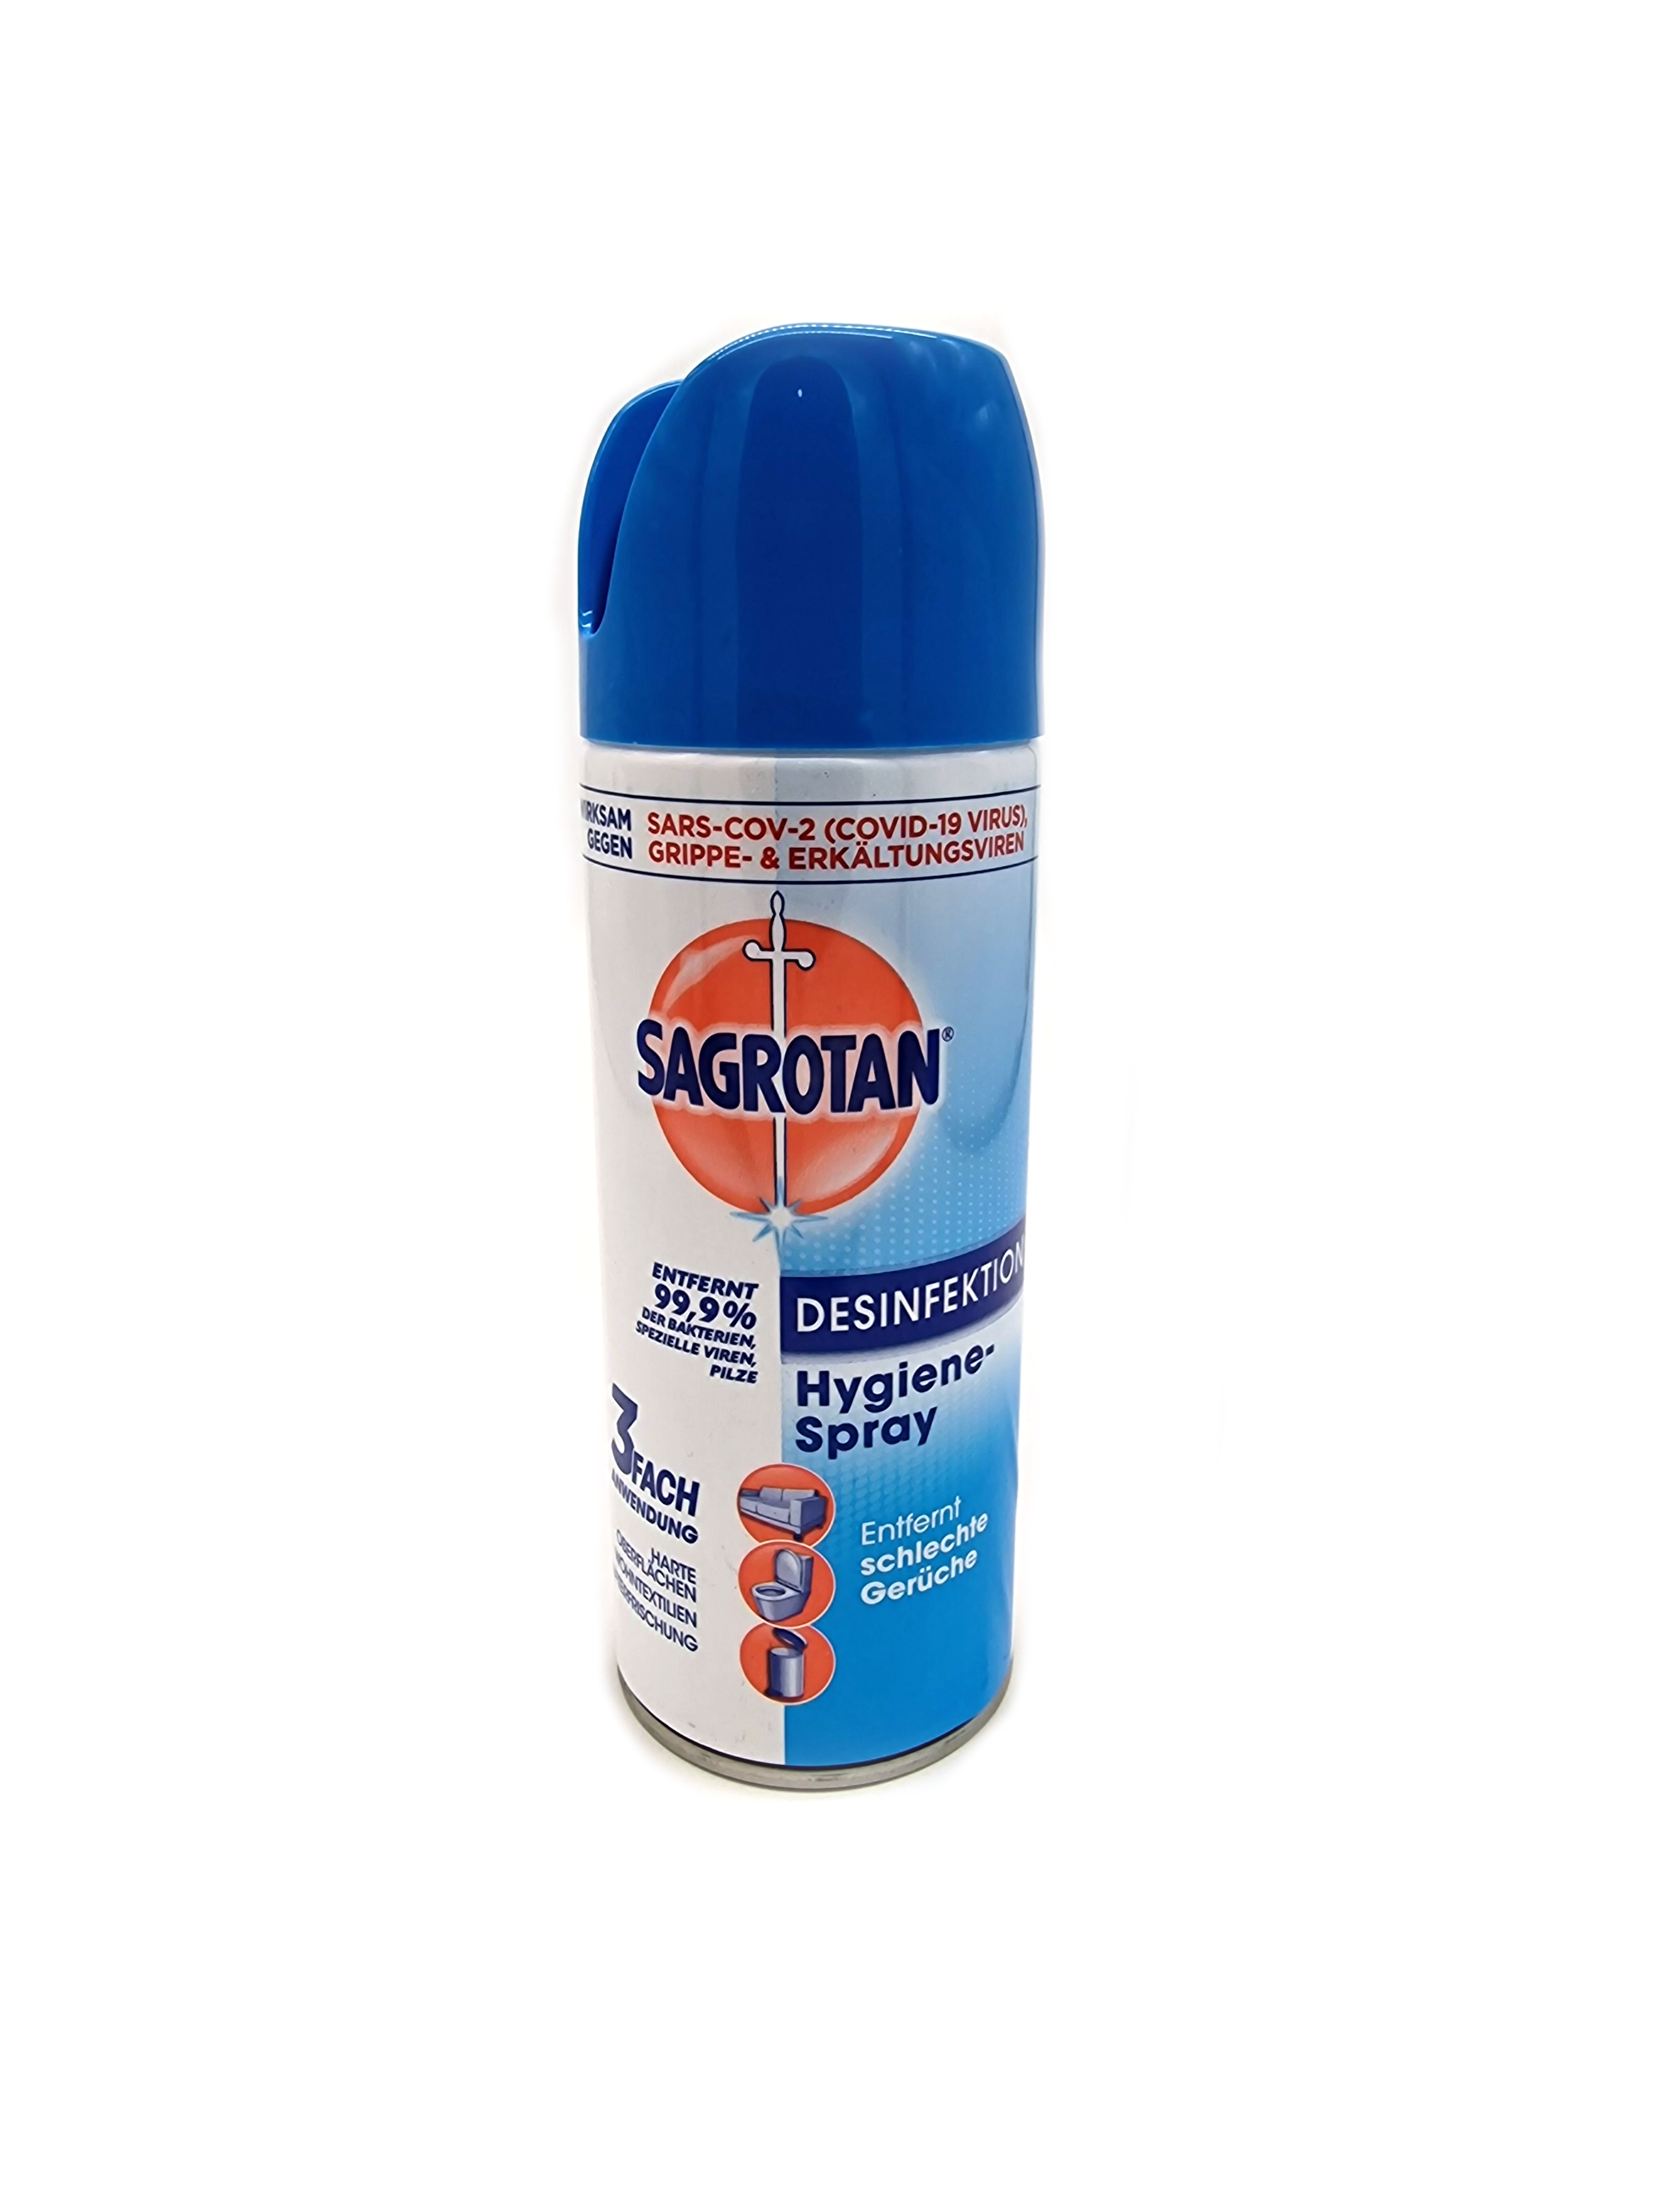 Sagrotan Hygiene Spray 400ml Desinfektion